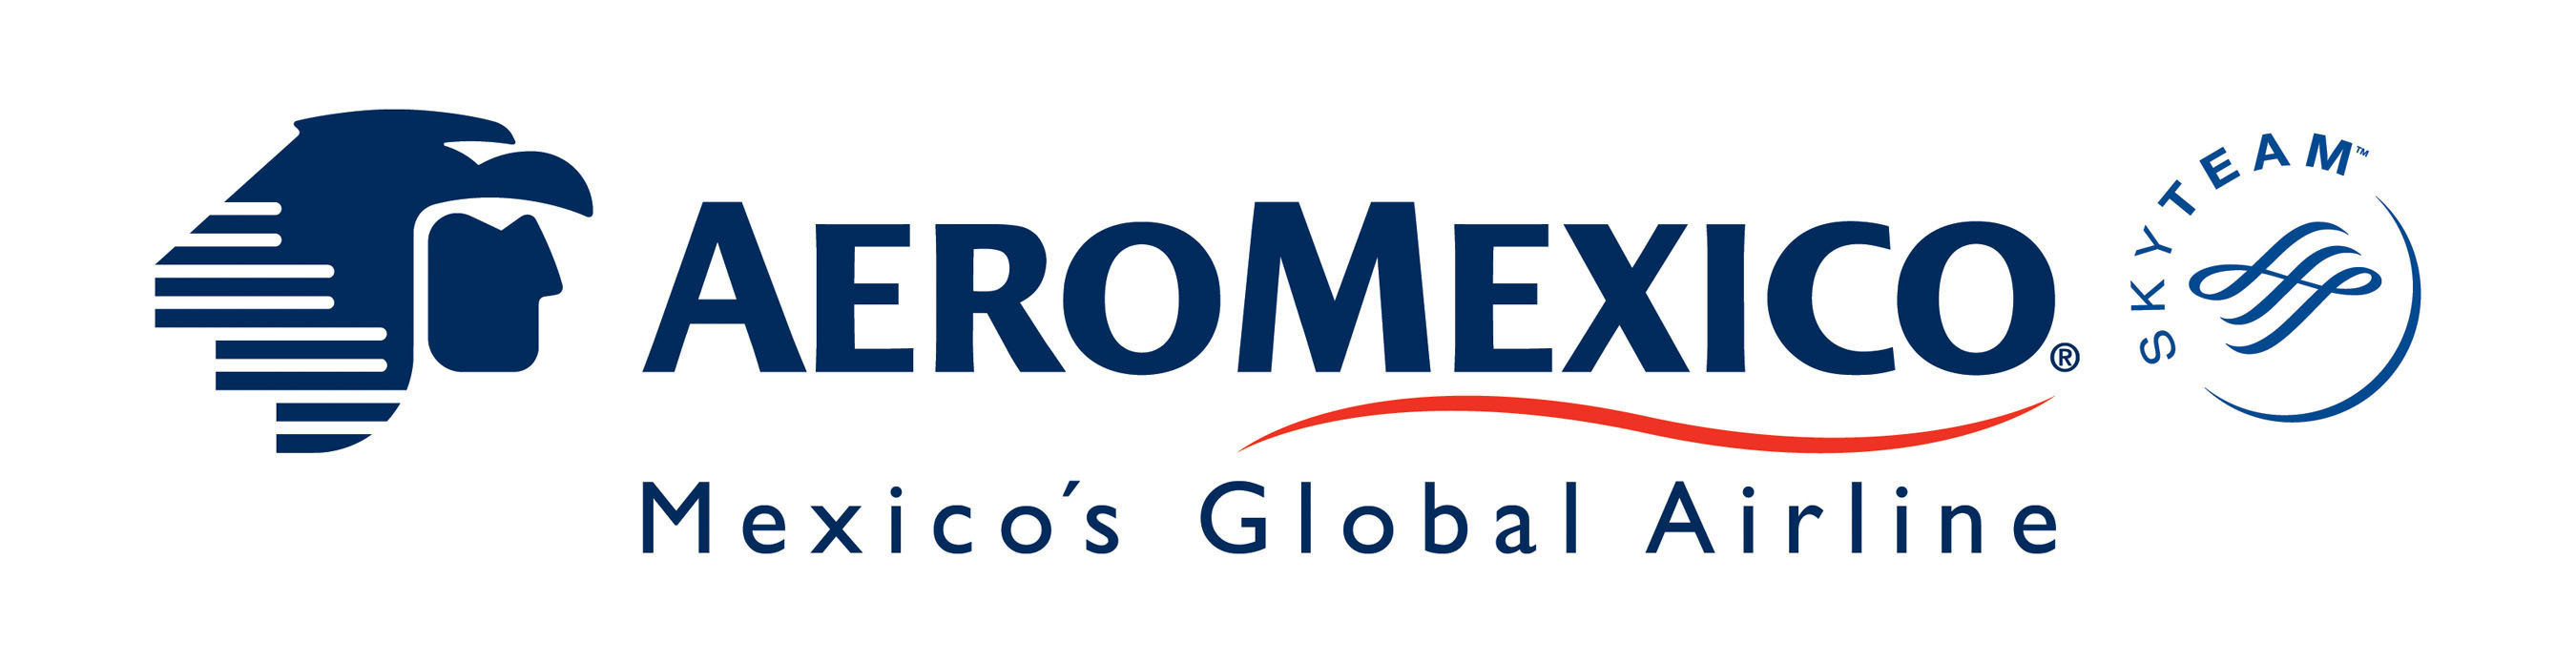 Aeromexico Logo. (PRNewsFoto/Aeromexico) (PRNewsFoto/)